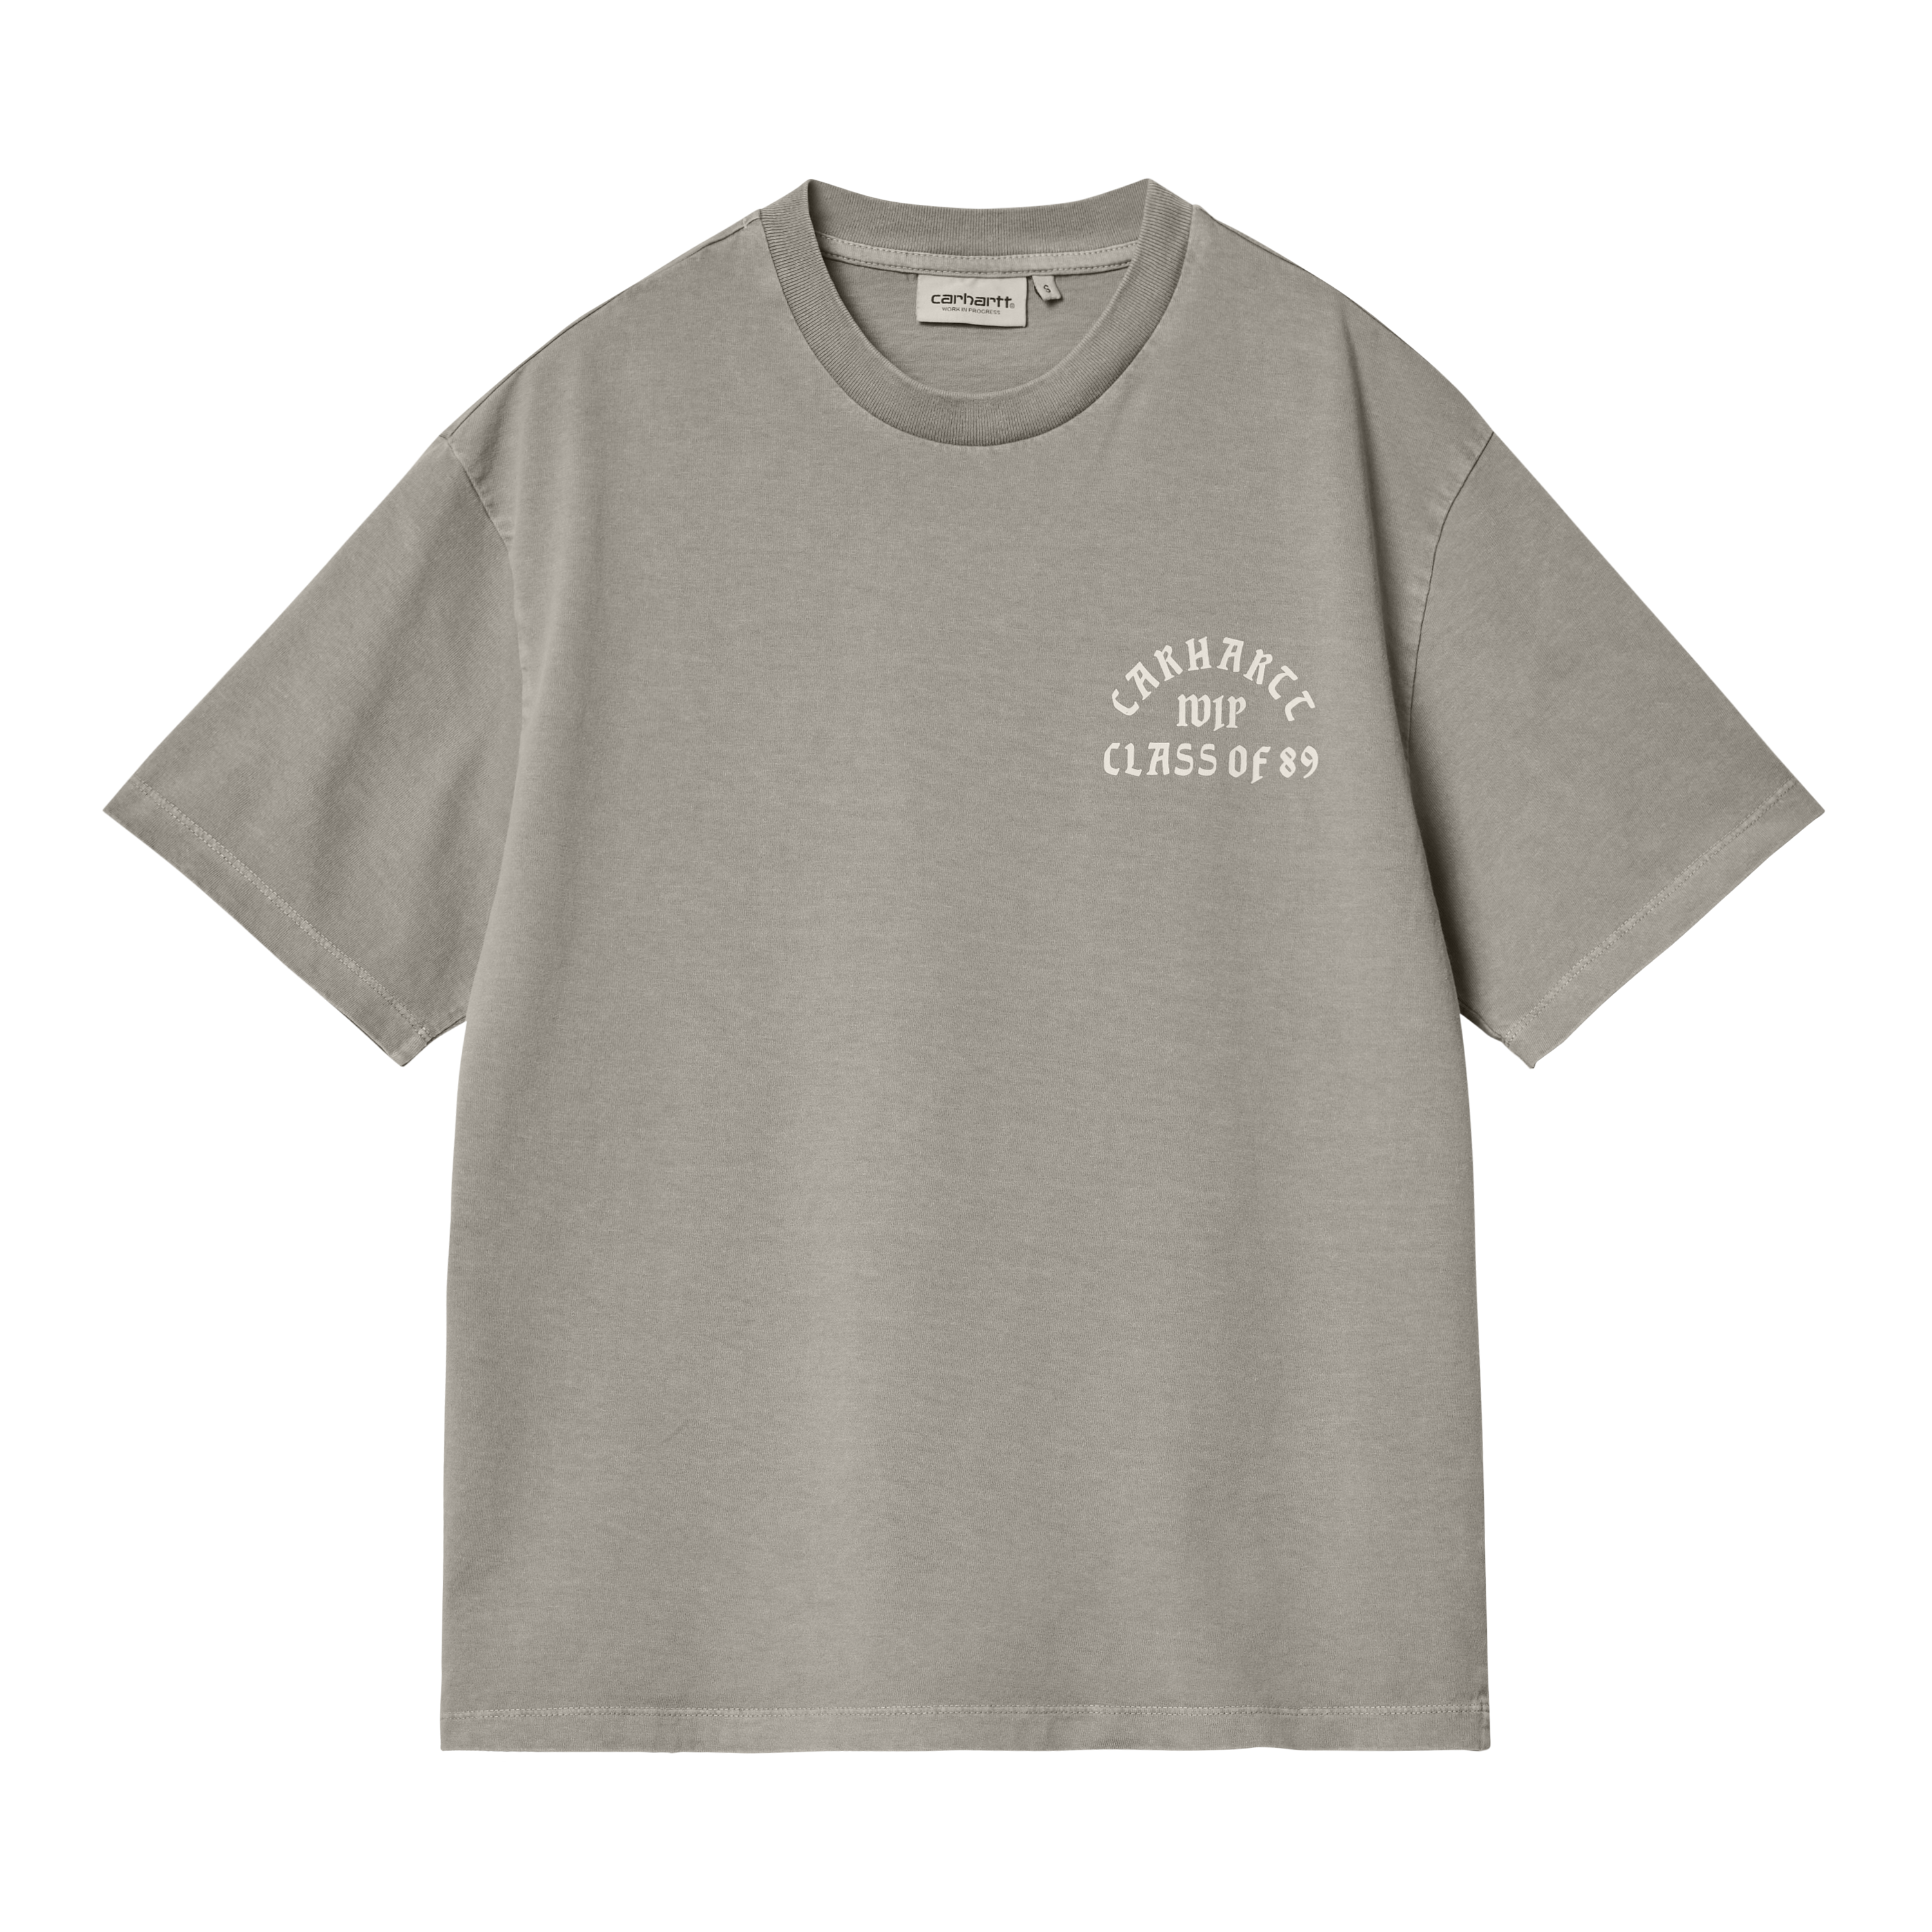 Carhartt WIP Women’s Short Sleeve Class of 89 T-Shirt in Grau